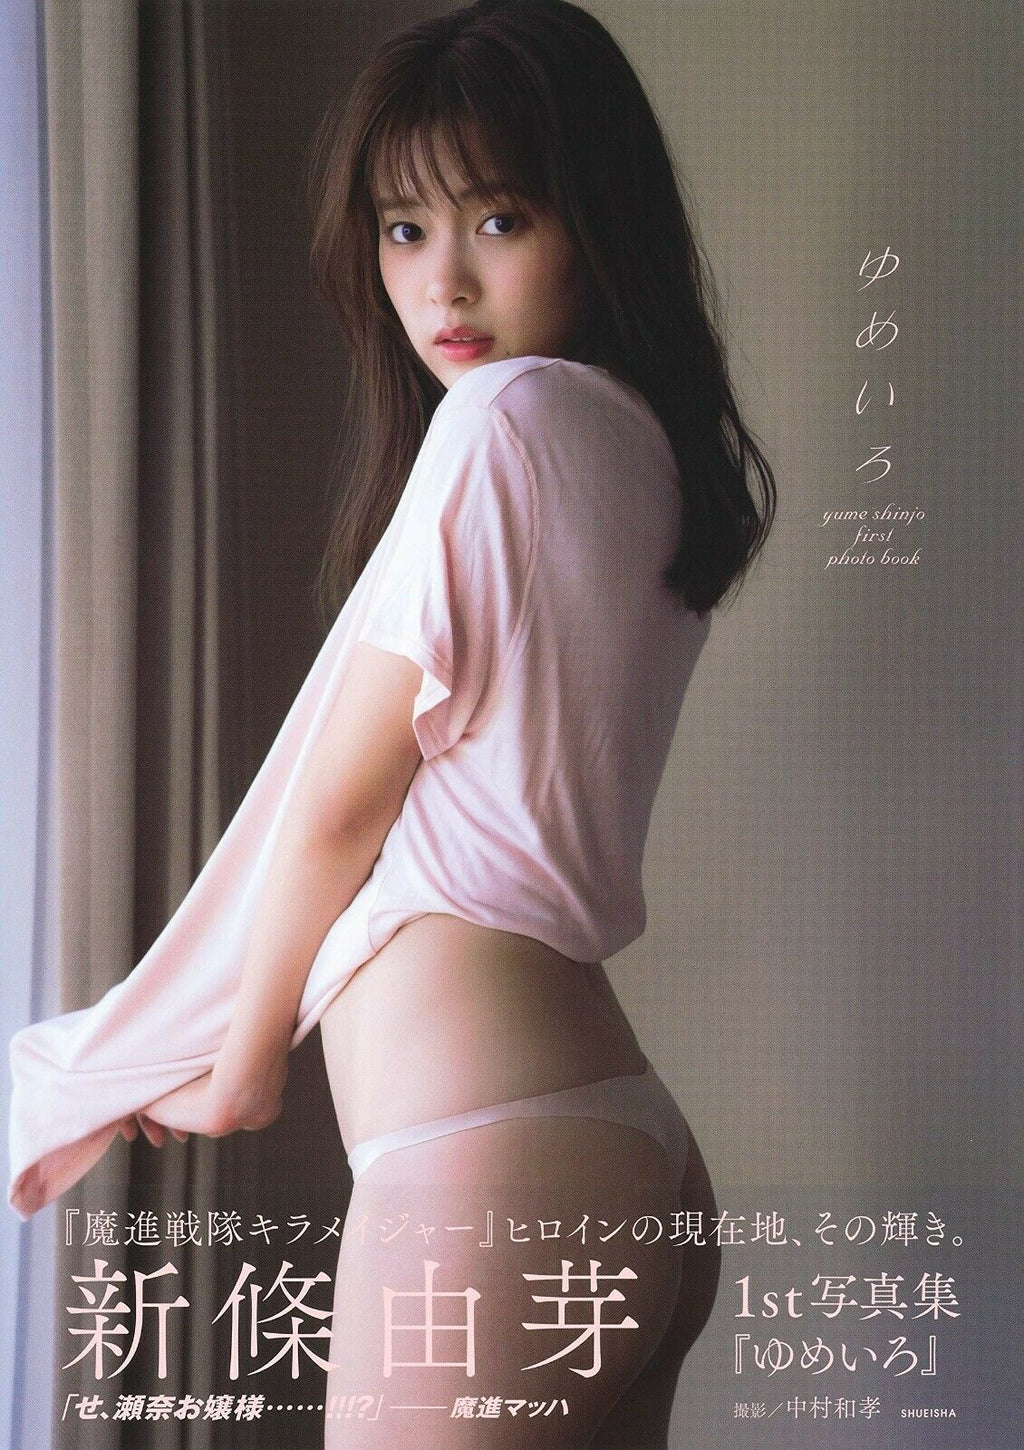 NEW' Yume Shinjo Photo Book | JAPAN Japanese Gravure Idol Actress Kiramager